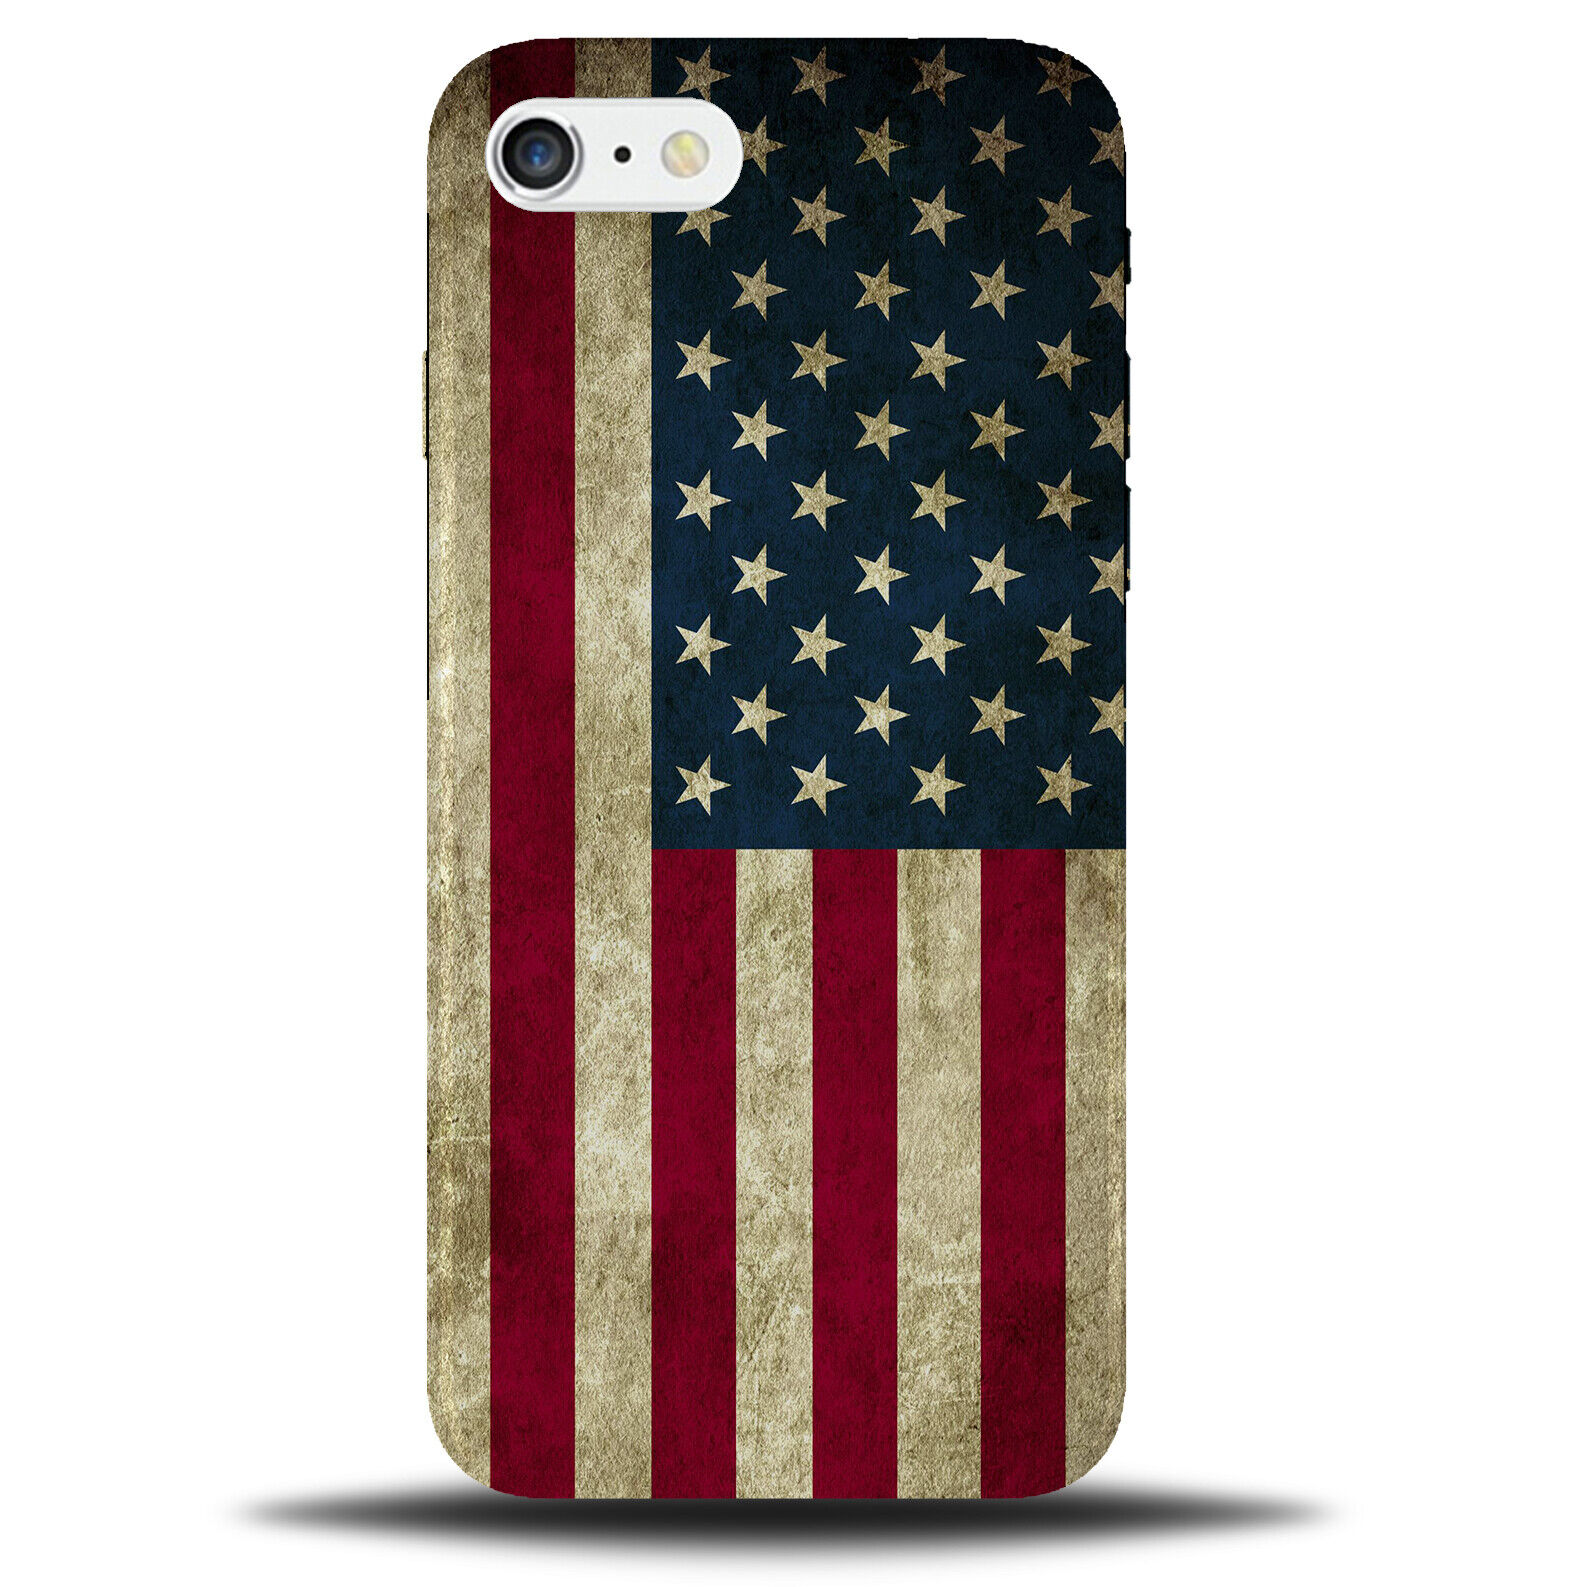 HTC coin case USA flag - 2